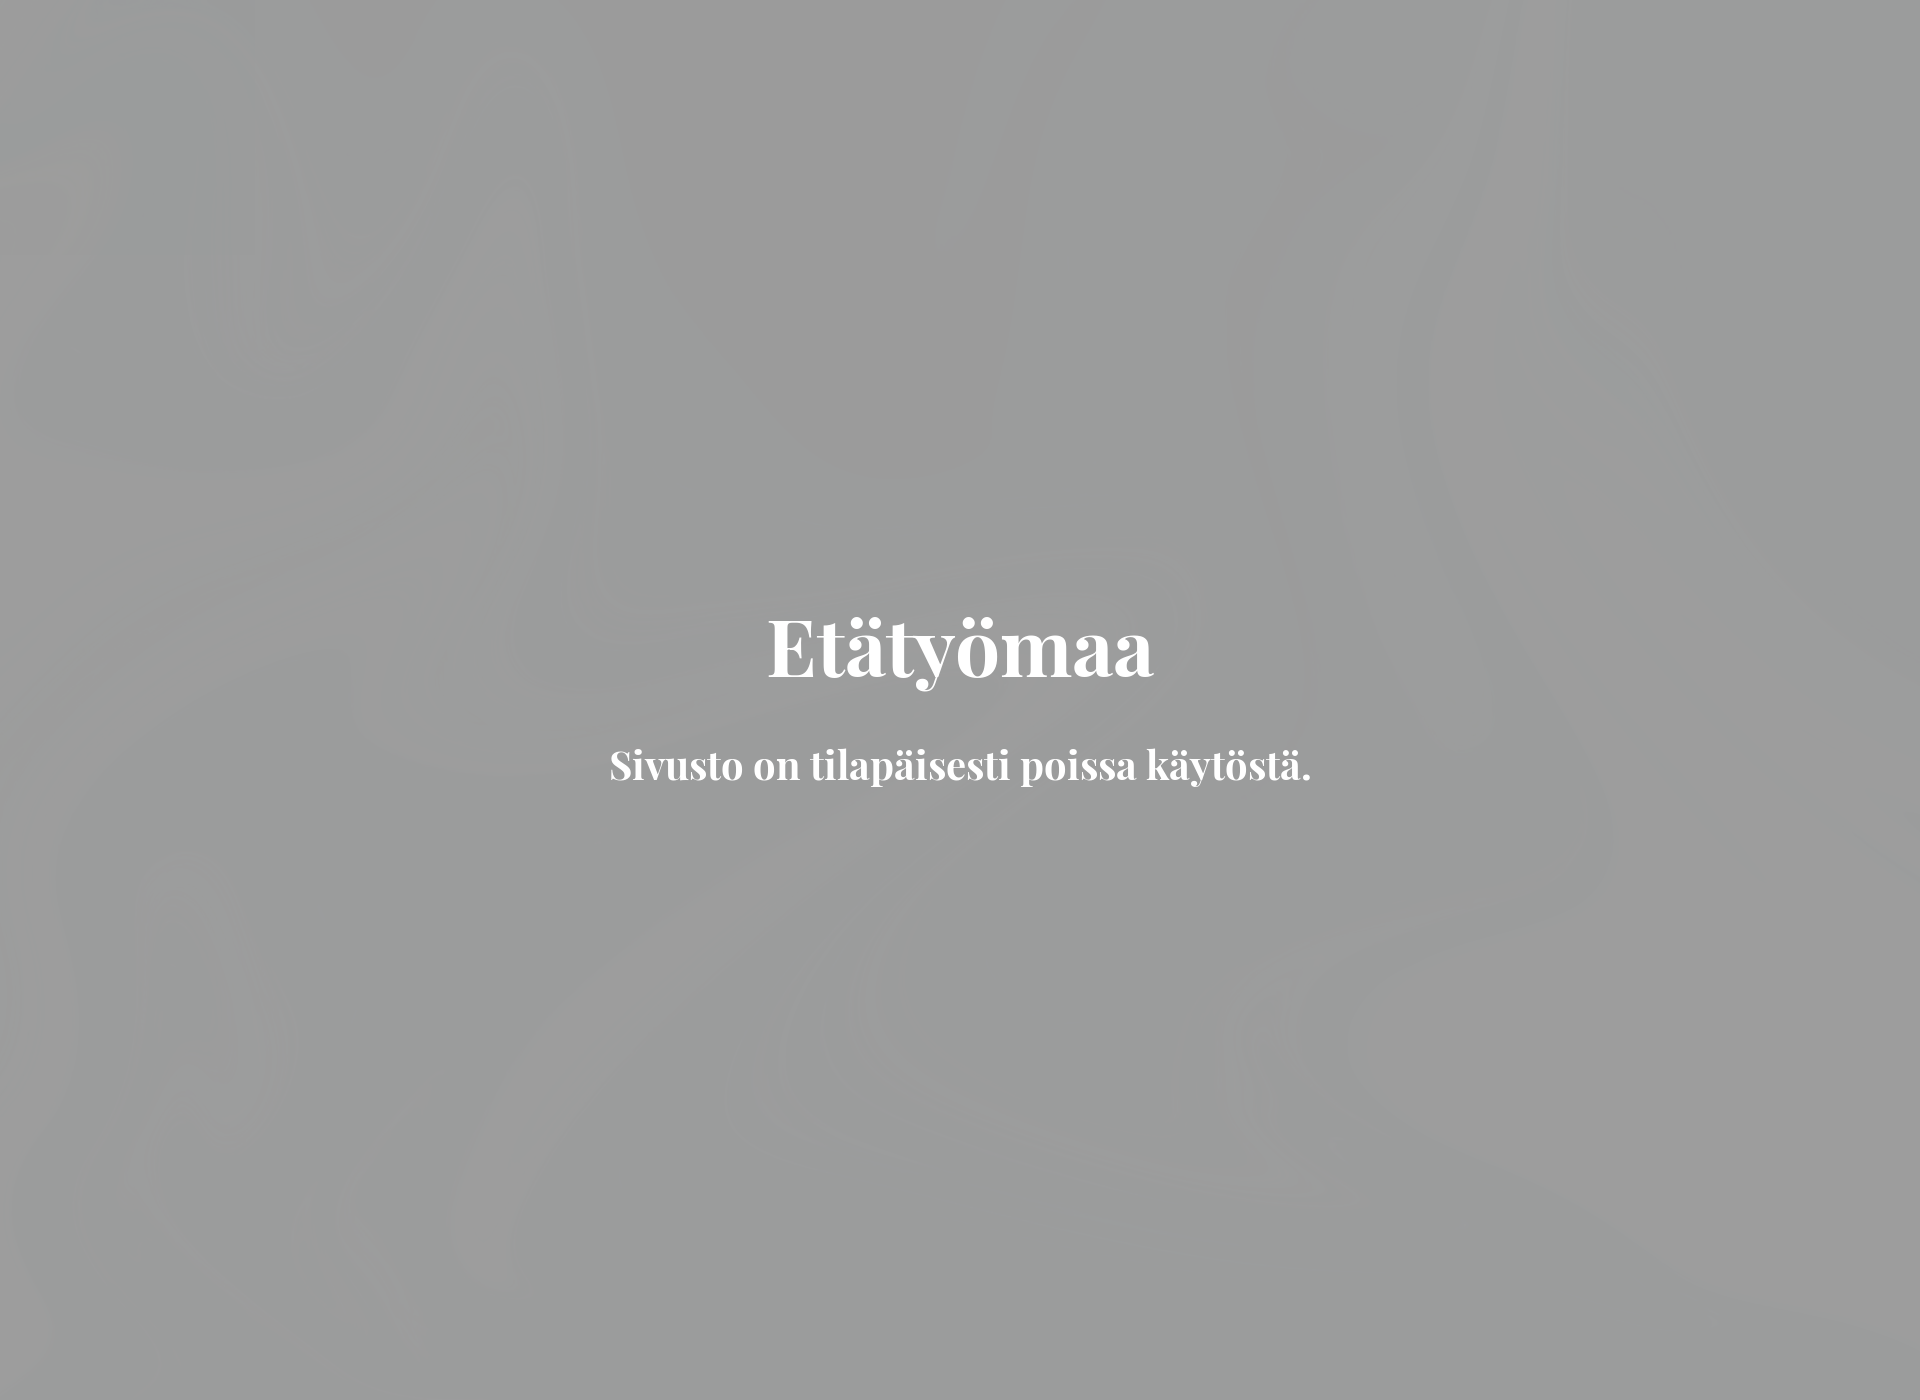 Skärmdump för etatyomaa.fi